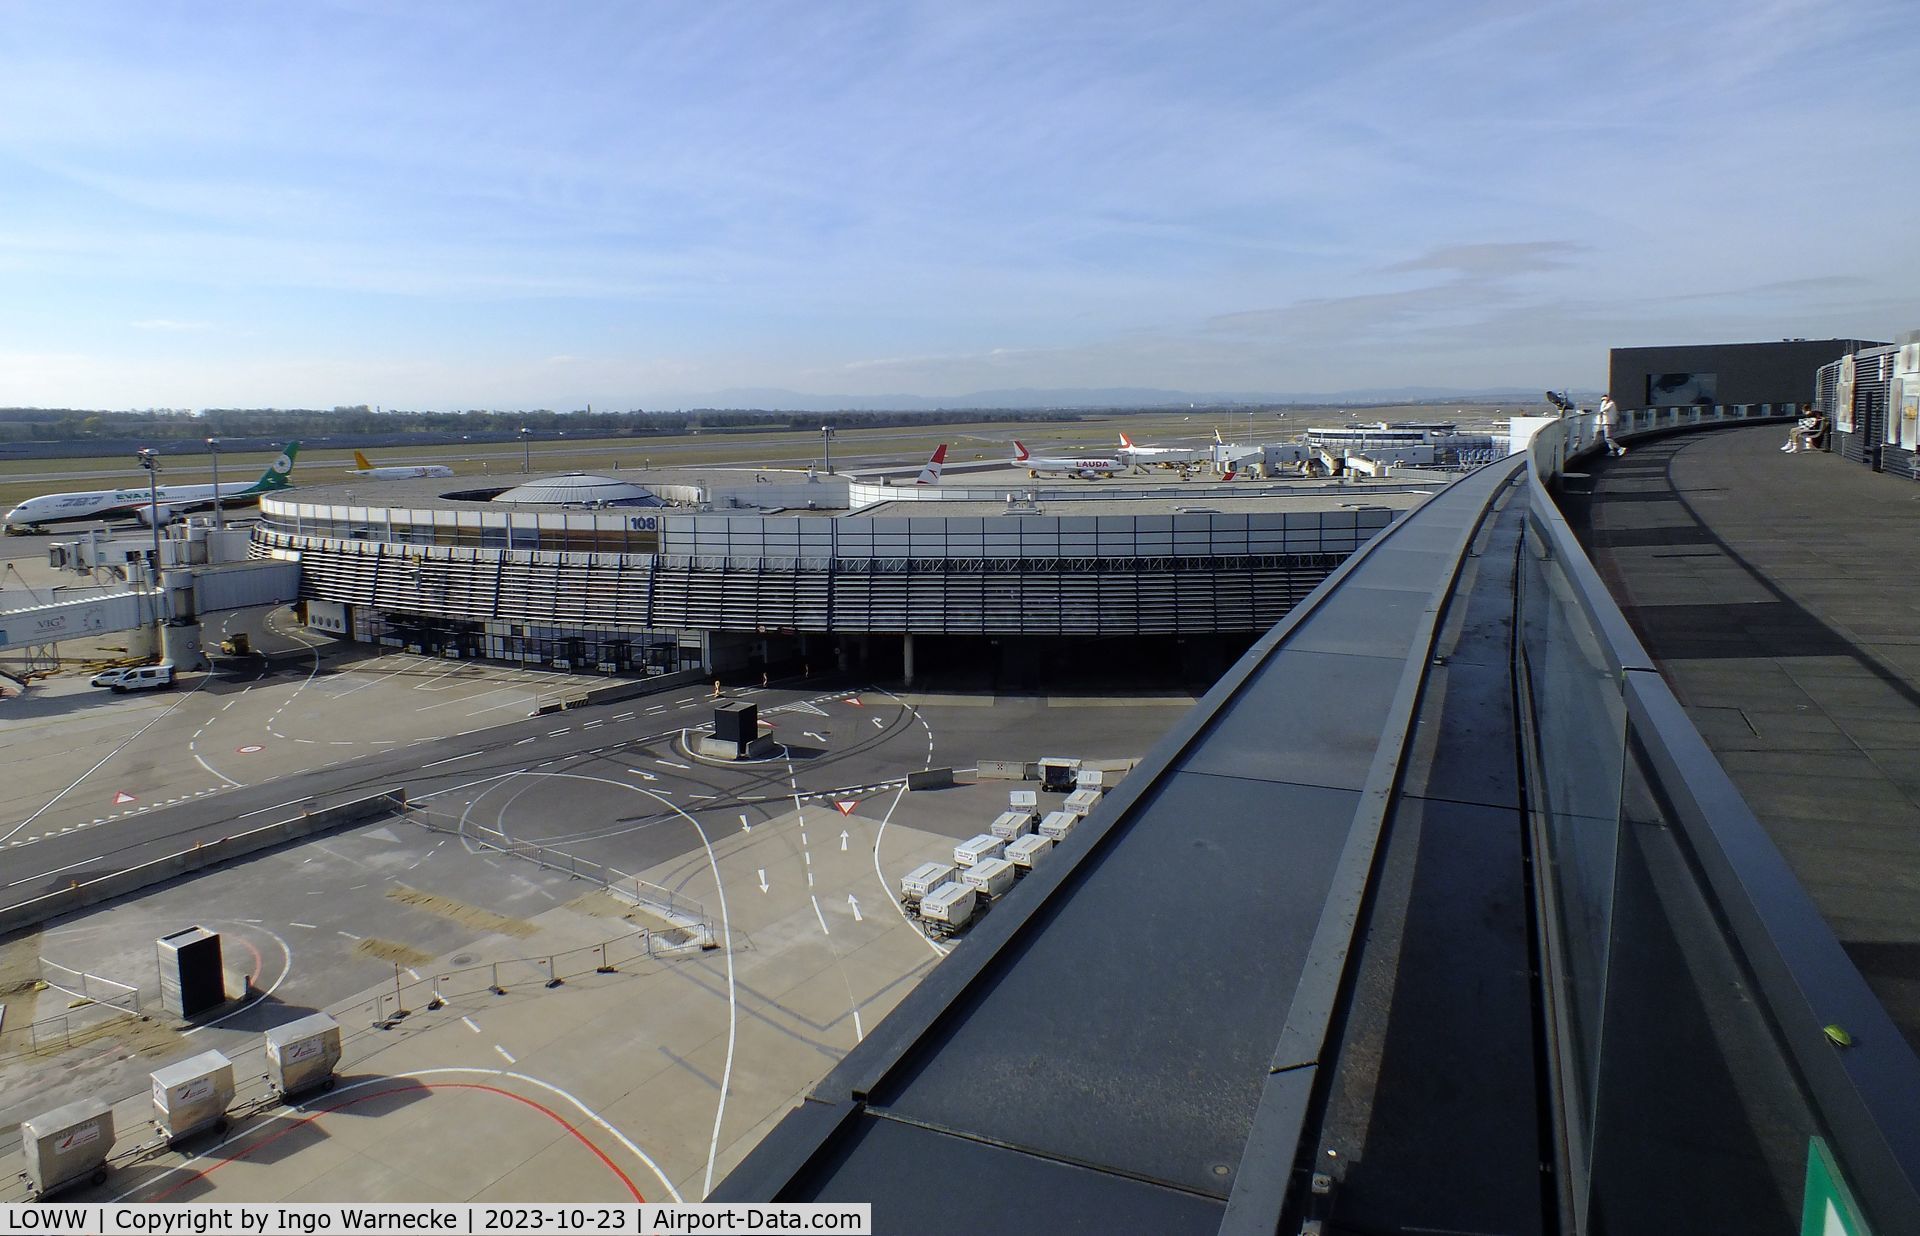 Vienna International Airport, Vienna Austria (LOWW) - visitors terrace and gates building D at Wien airport